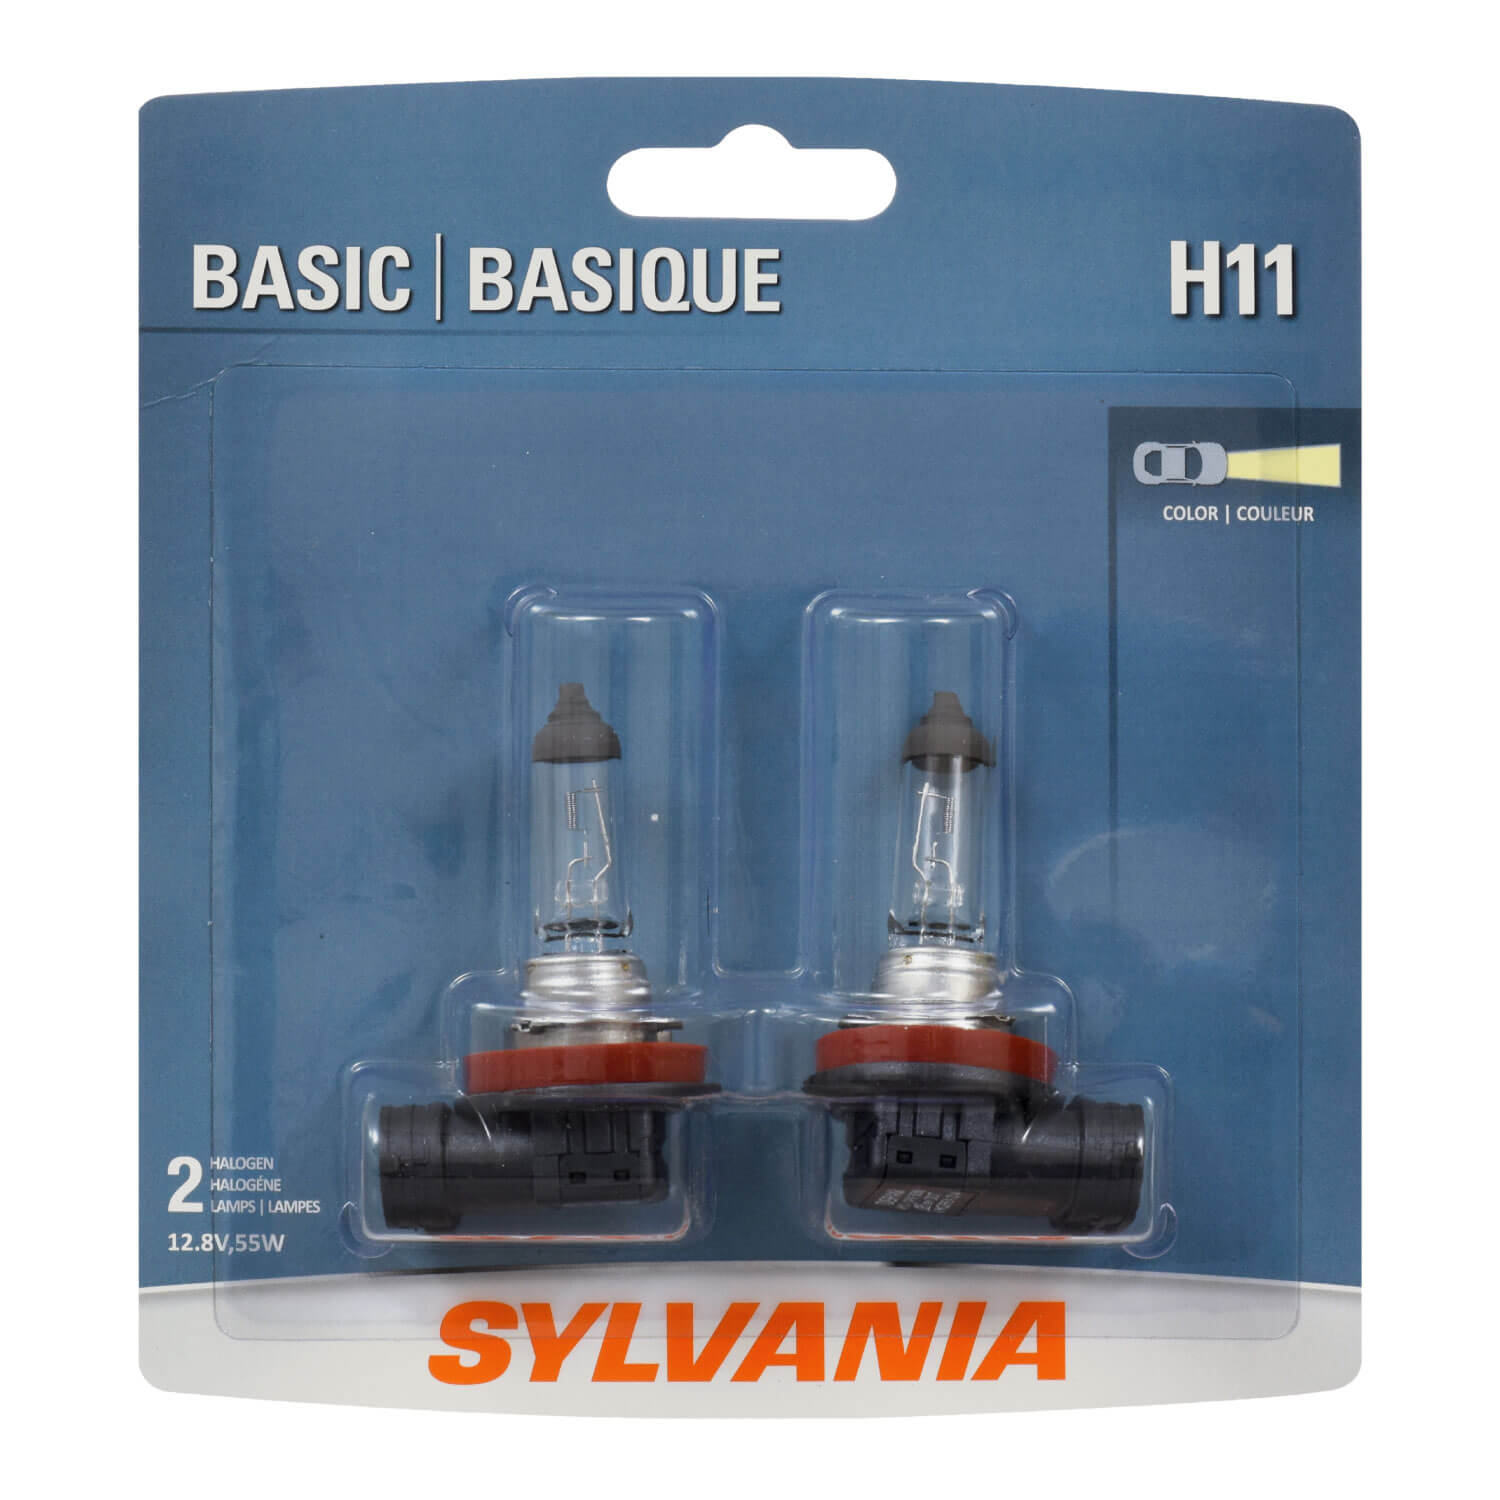 SYLVANIA H11 Basic Halogen Headlight Bulb, 2